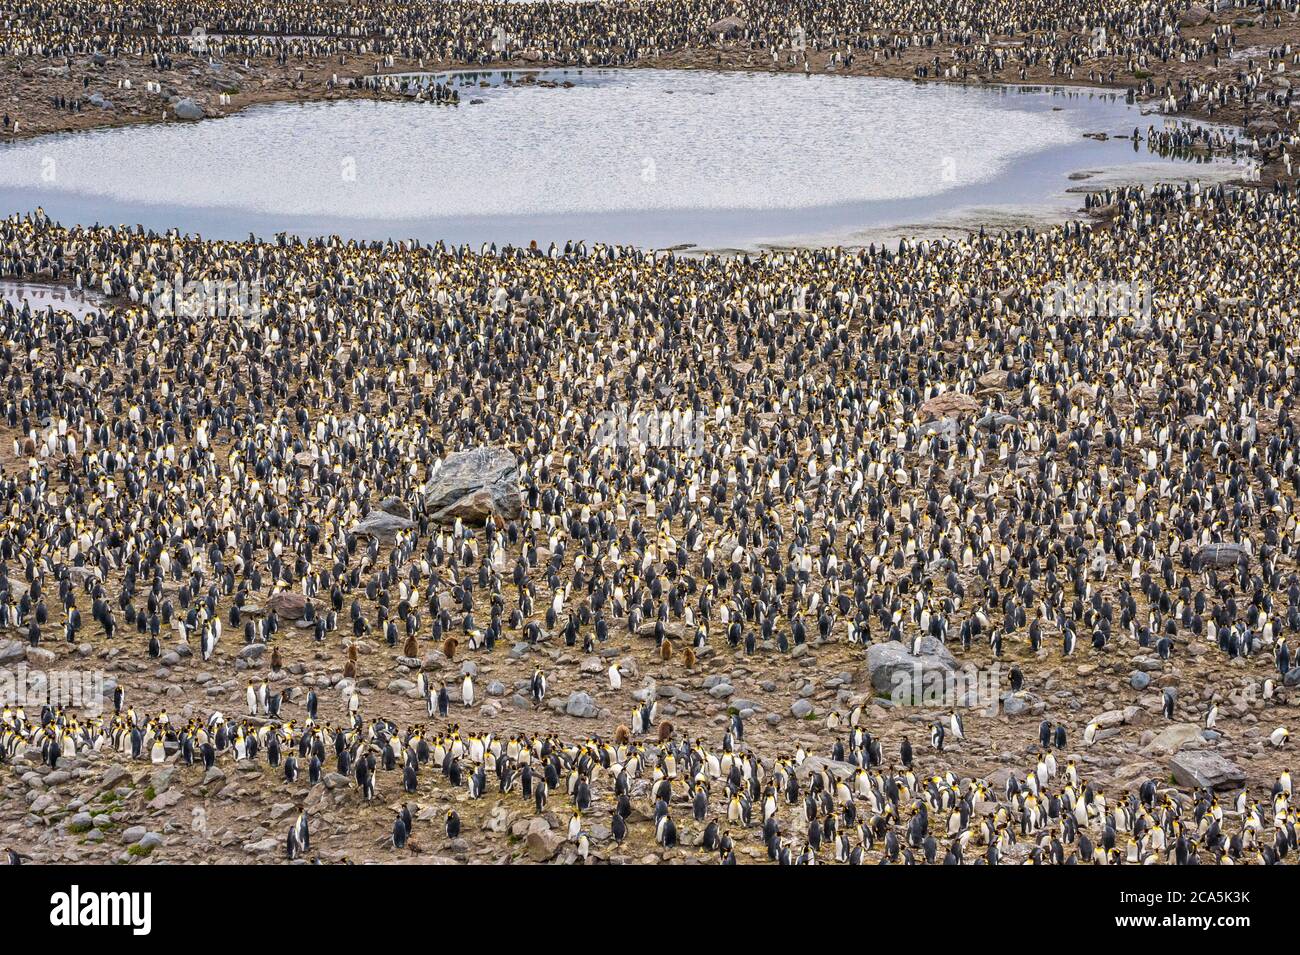 Antarctica, South Georgia Island (British overseas territory), Saint Andrews Bay, colony of King Penguins (Aptenodytes patagonicus) Stock Photo